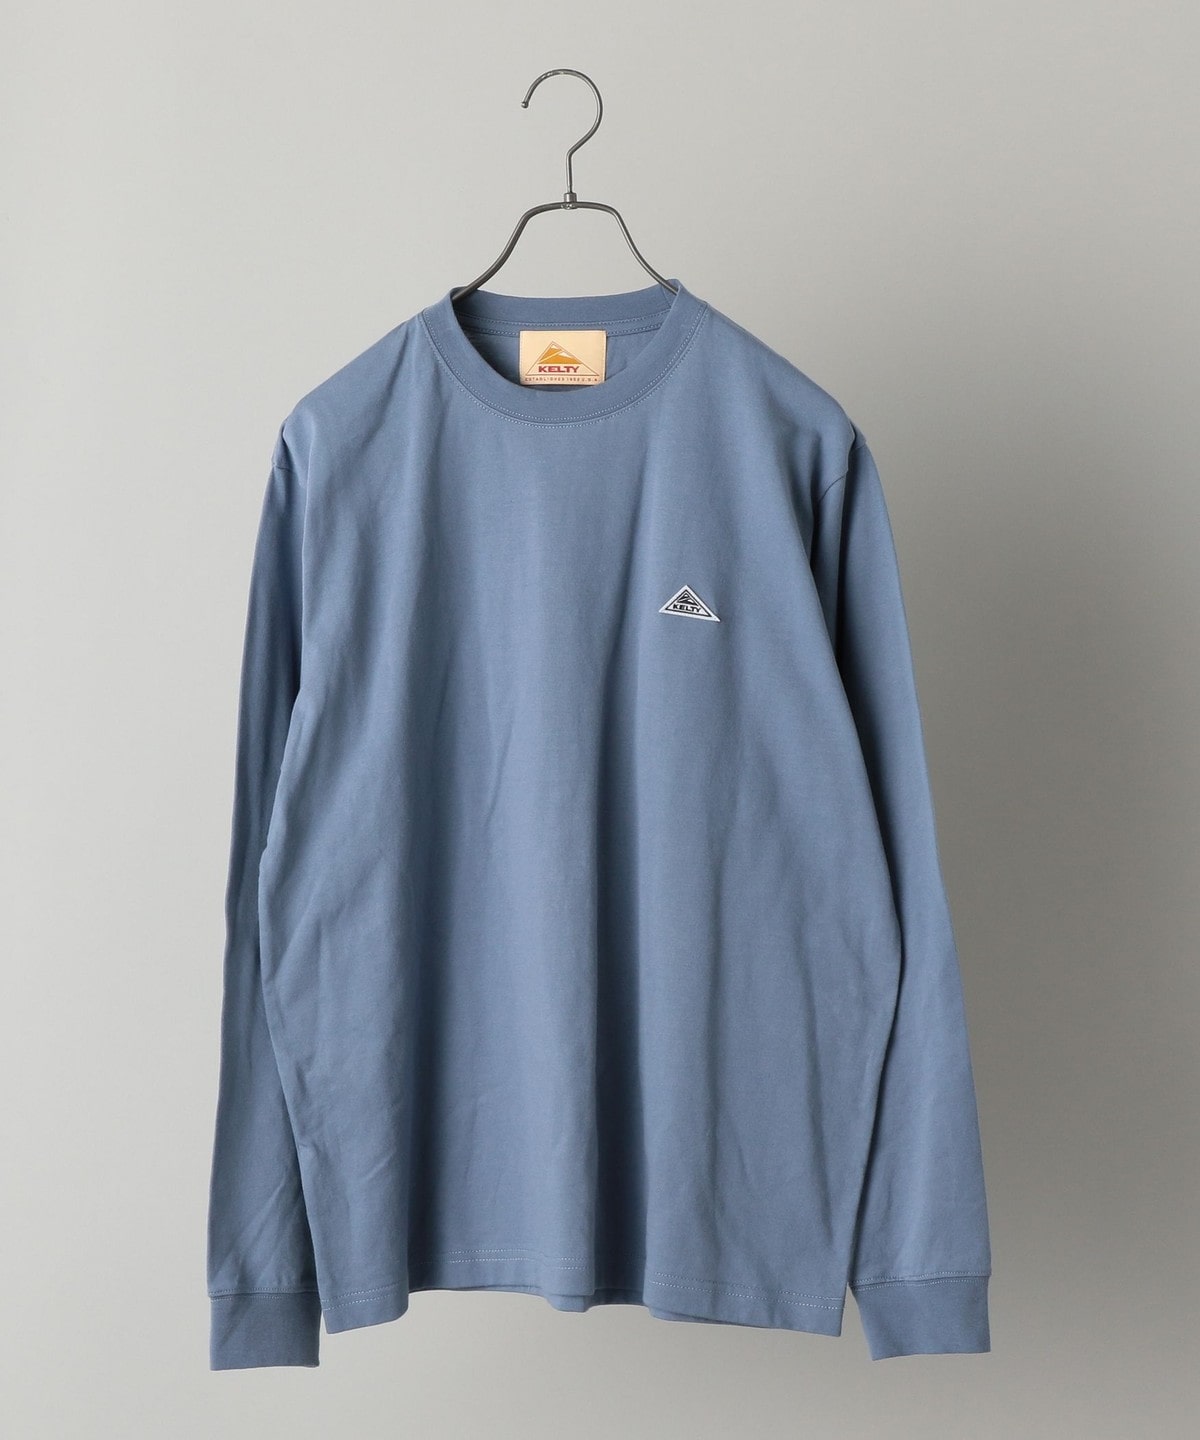 【SHIPS別注】KELTY: ワンポイント ネイビーロゴ ロングスリーブ Tシャツ (ロンT) ライトブルー